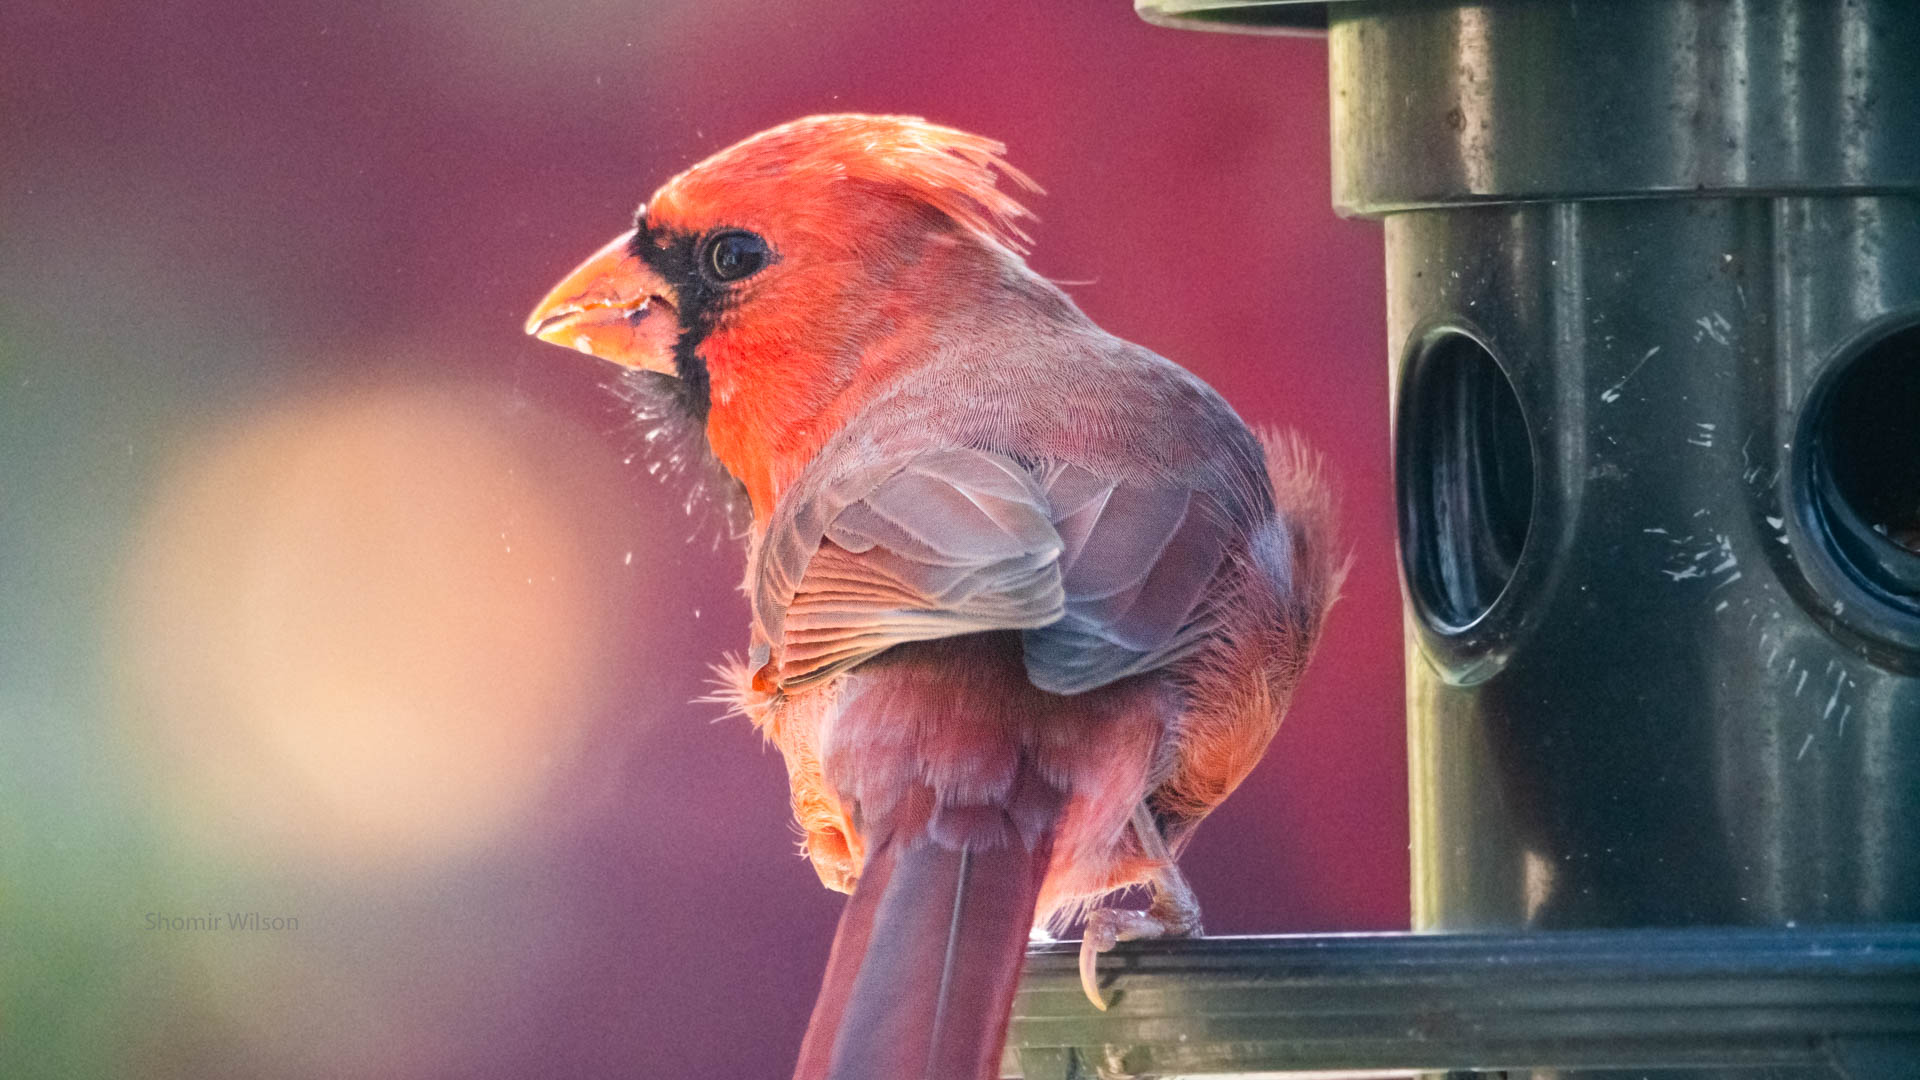 bright red bird on a birdfeeder with indistinct red, orange, and green bokeh behind it